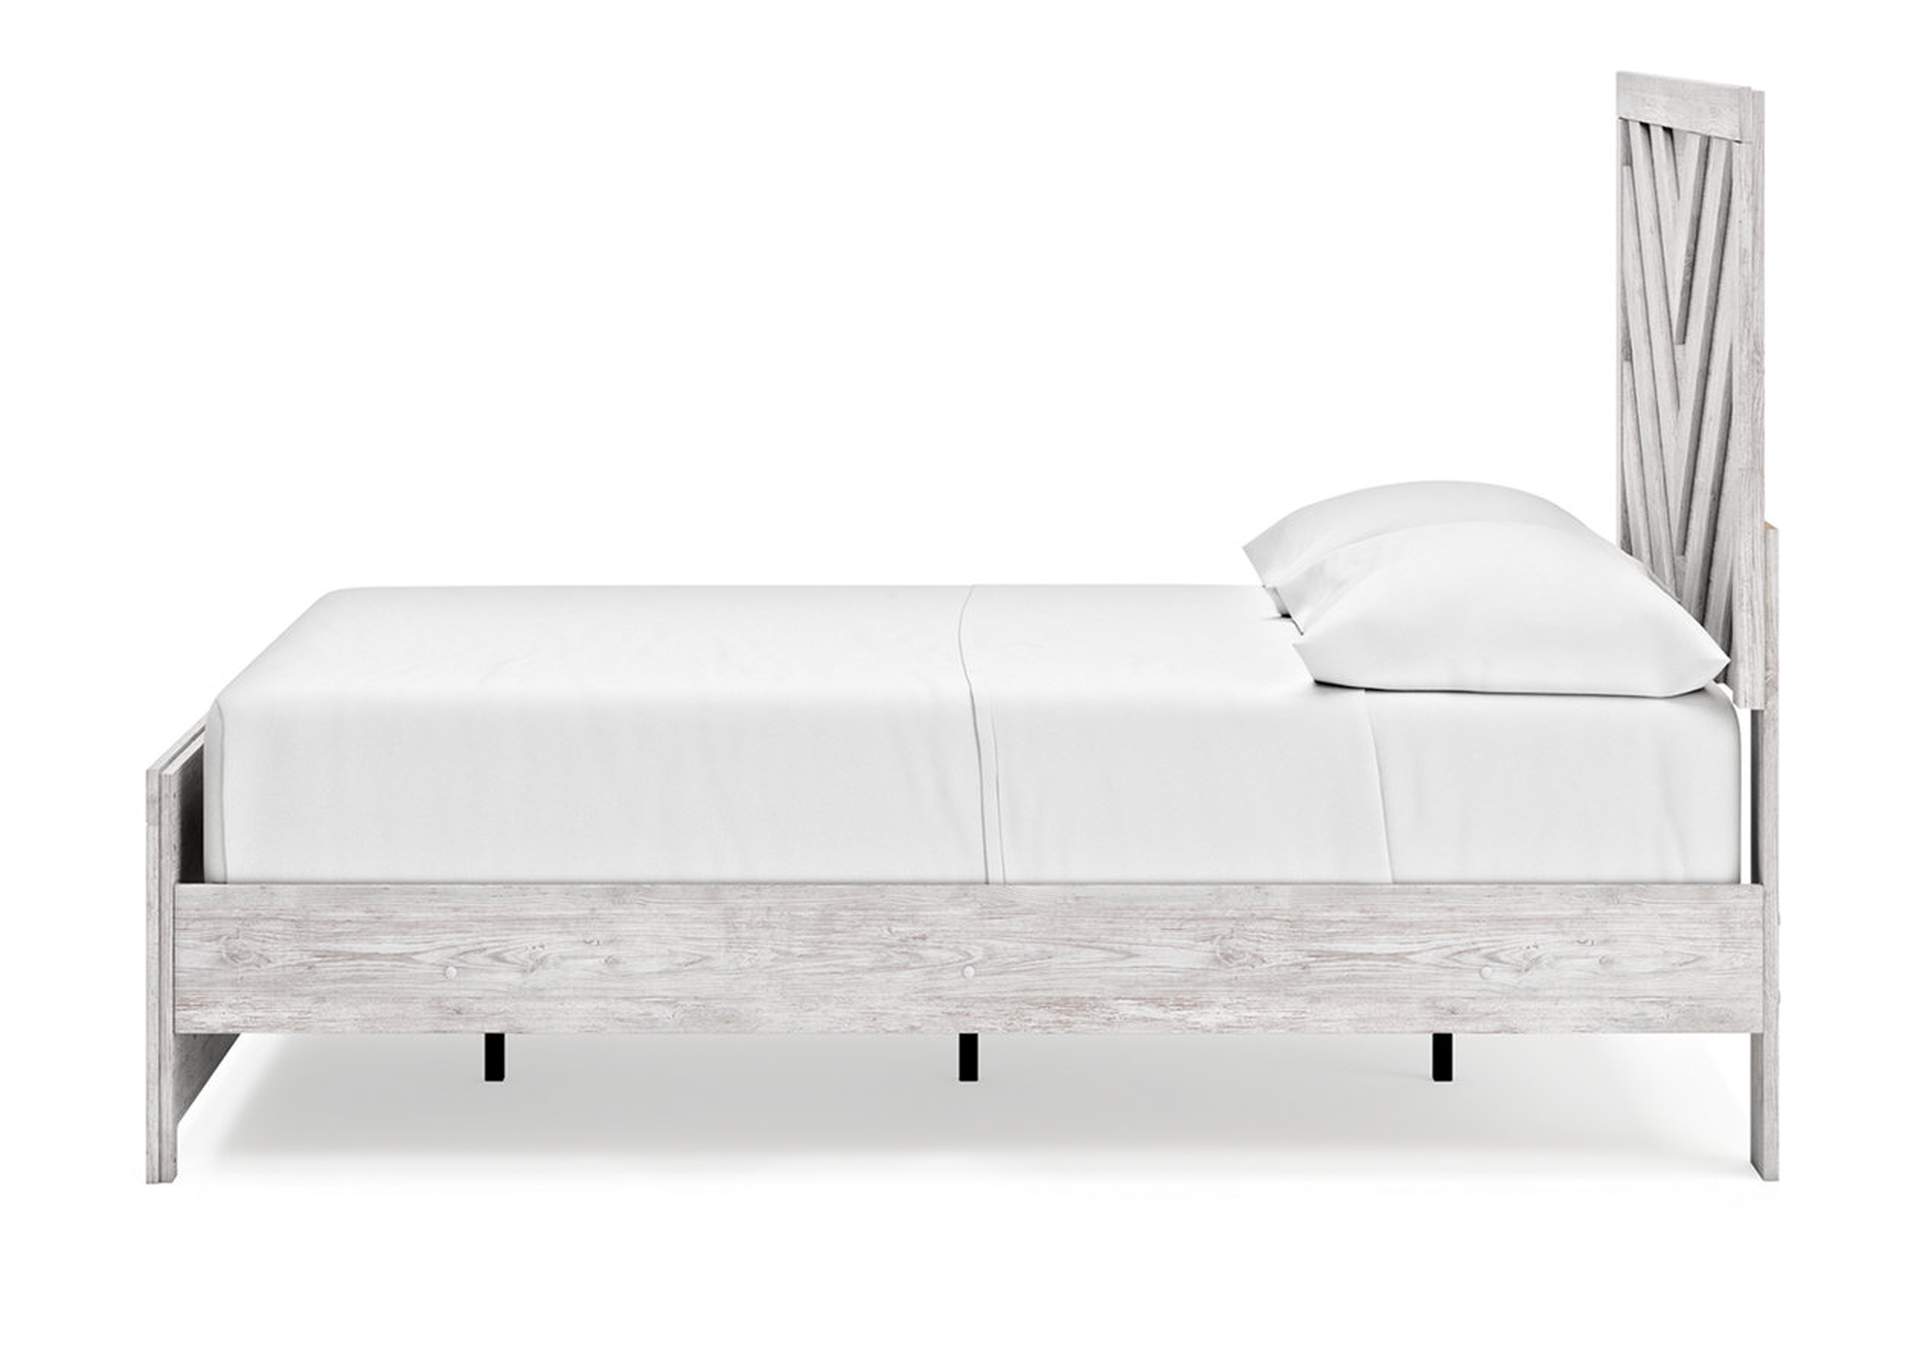 Cayboni Full Panel Bed,Signature Design By Ashley